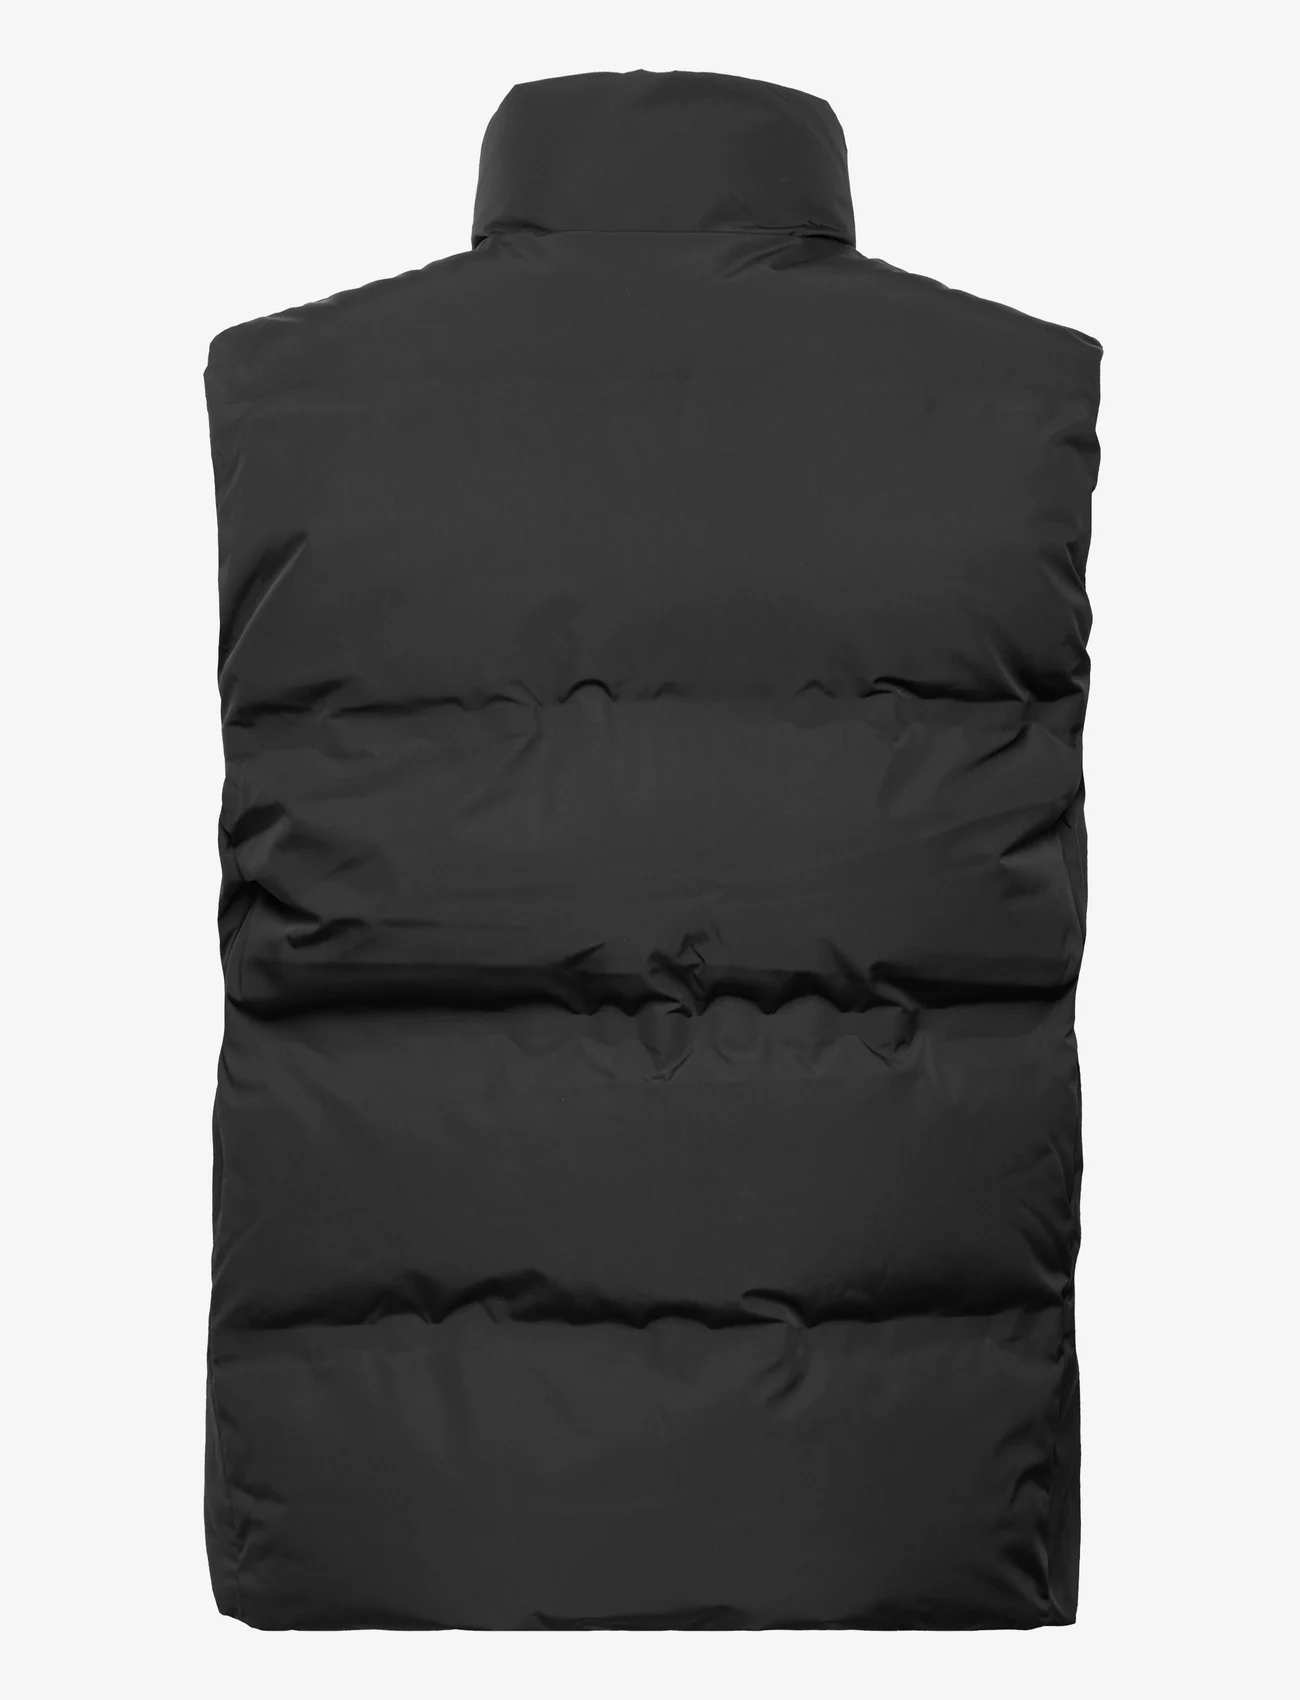 Knowledge Cotton Apparel - Puffer vest - GRS/Vegan - vests - black jet - 1